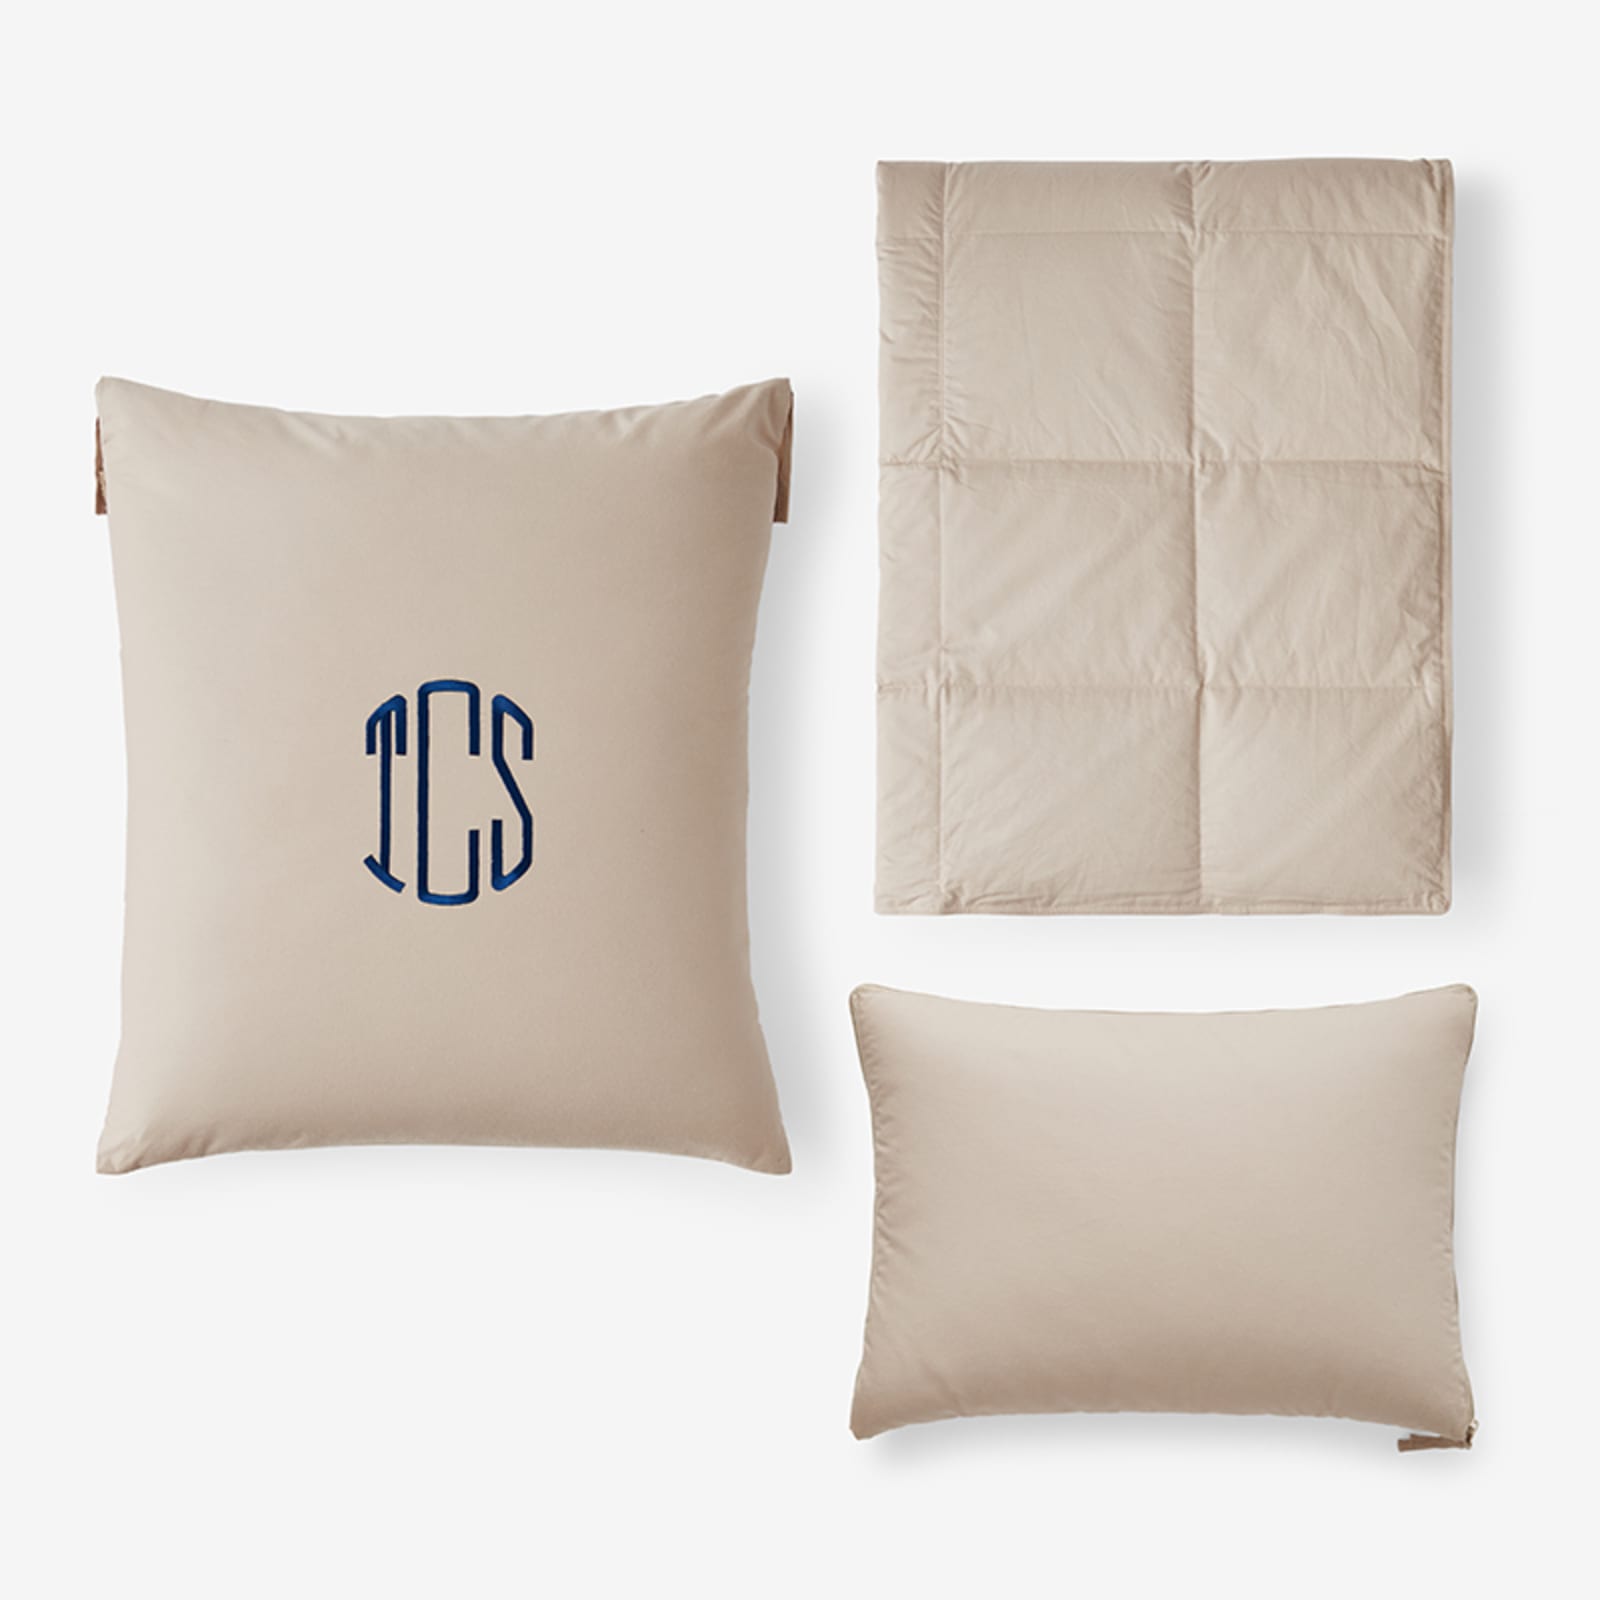 Decorative Pillow Cover Sets